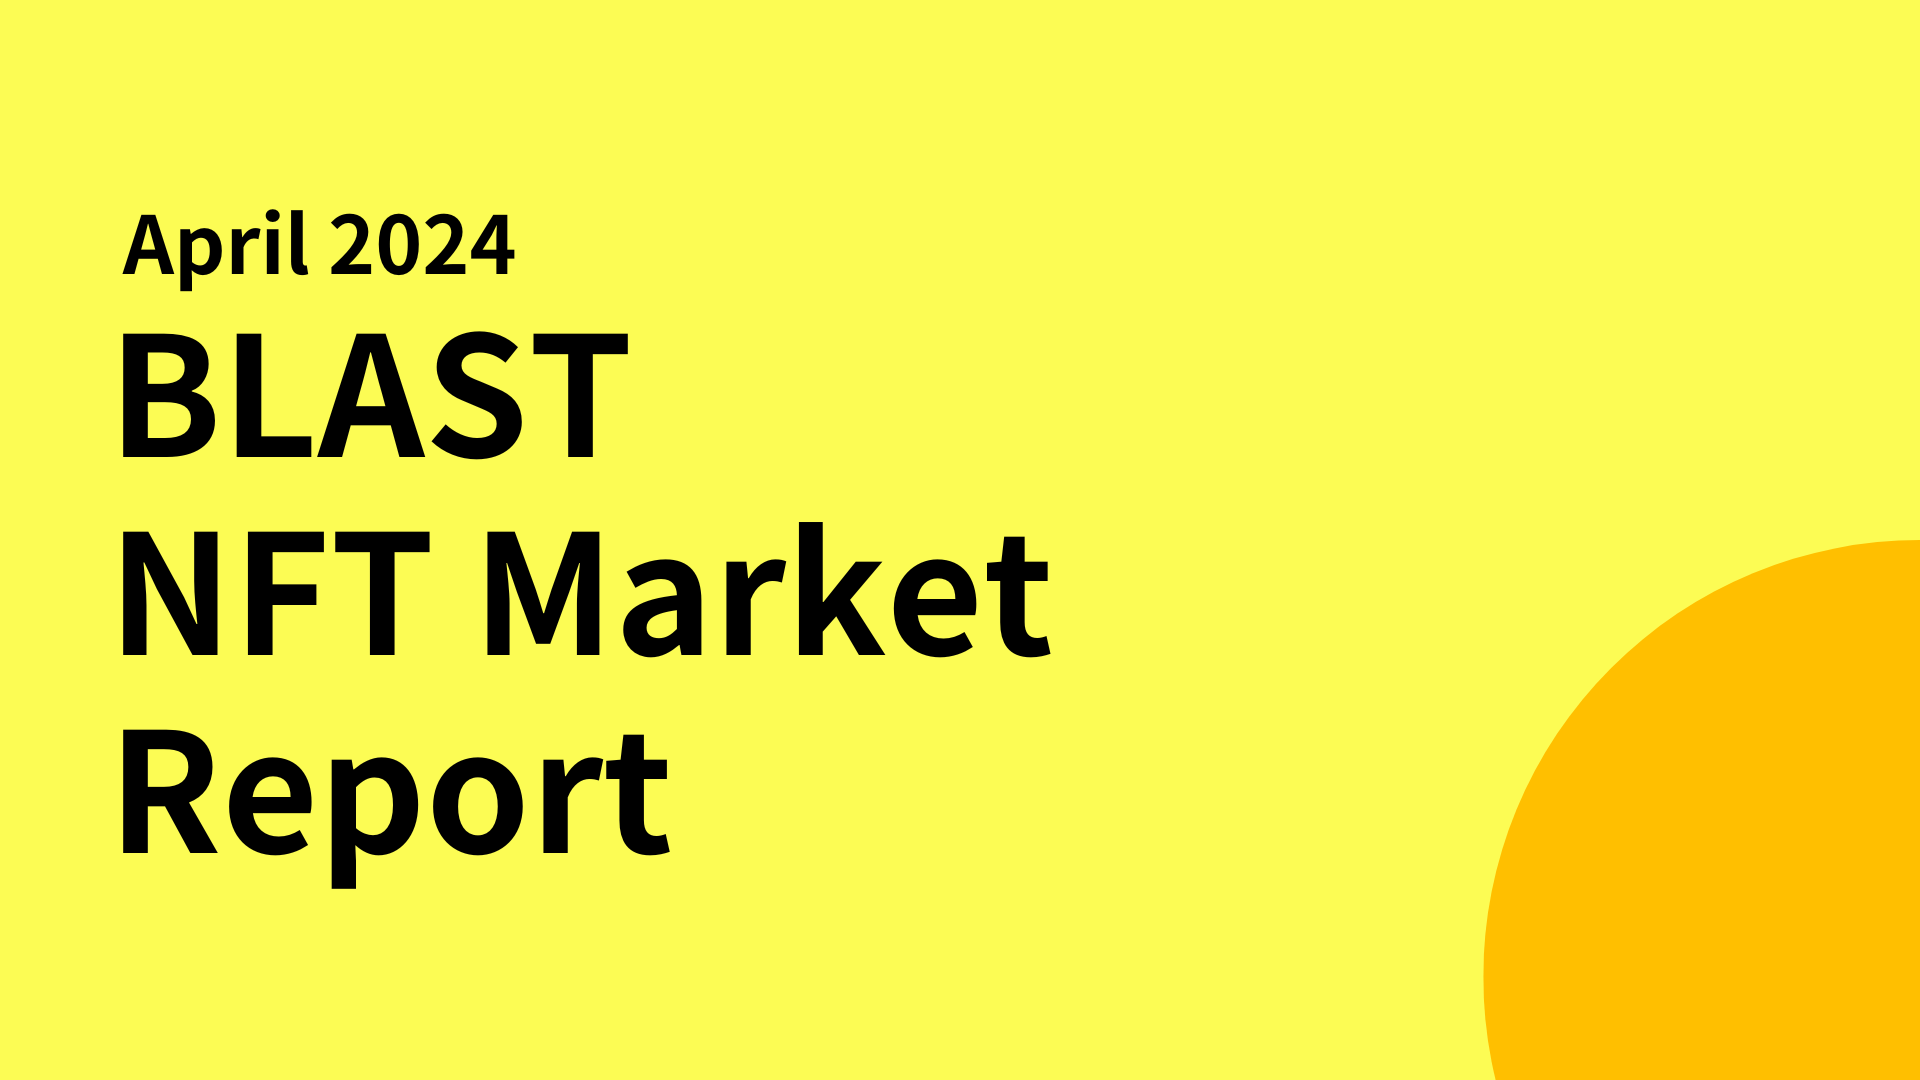 Blast NFT市場の調査レポート